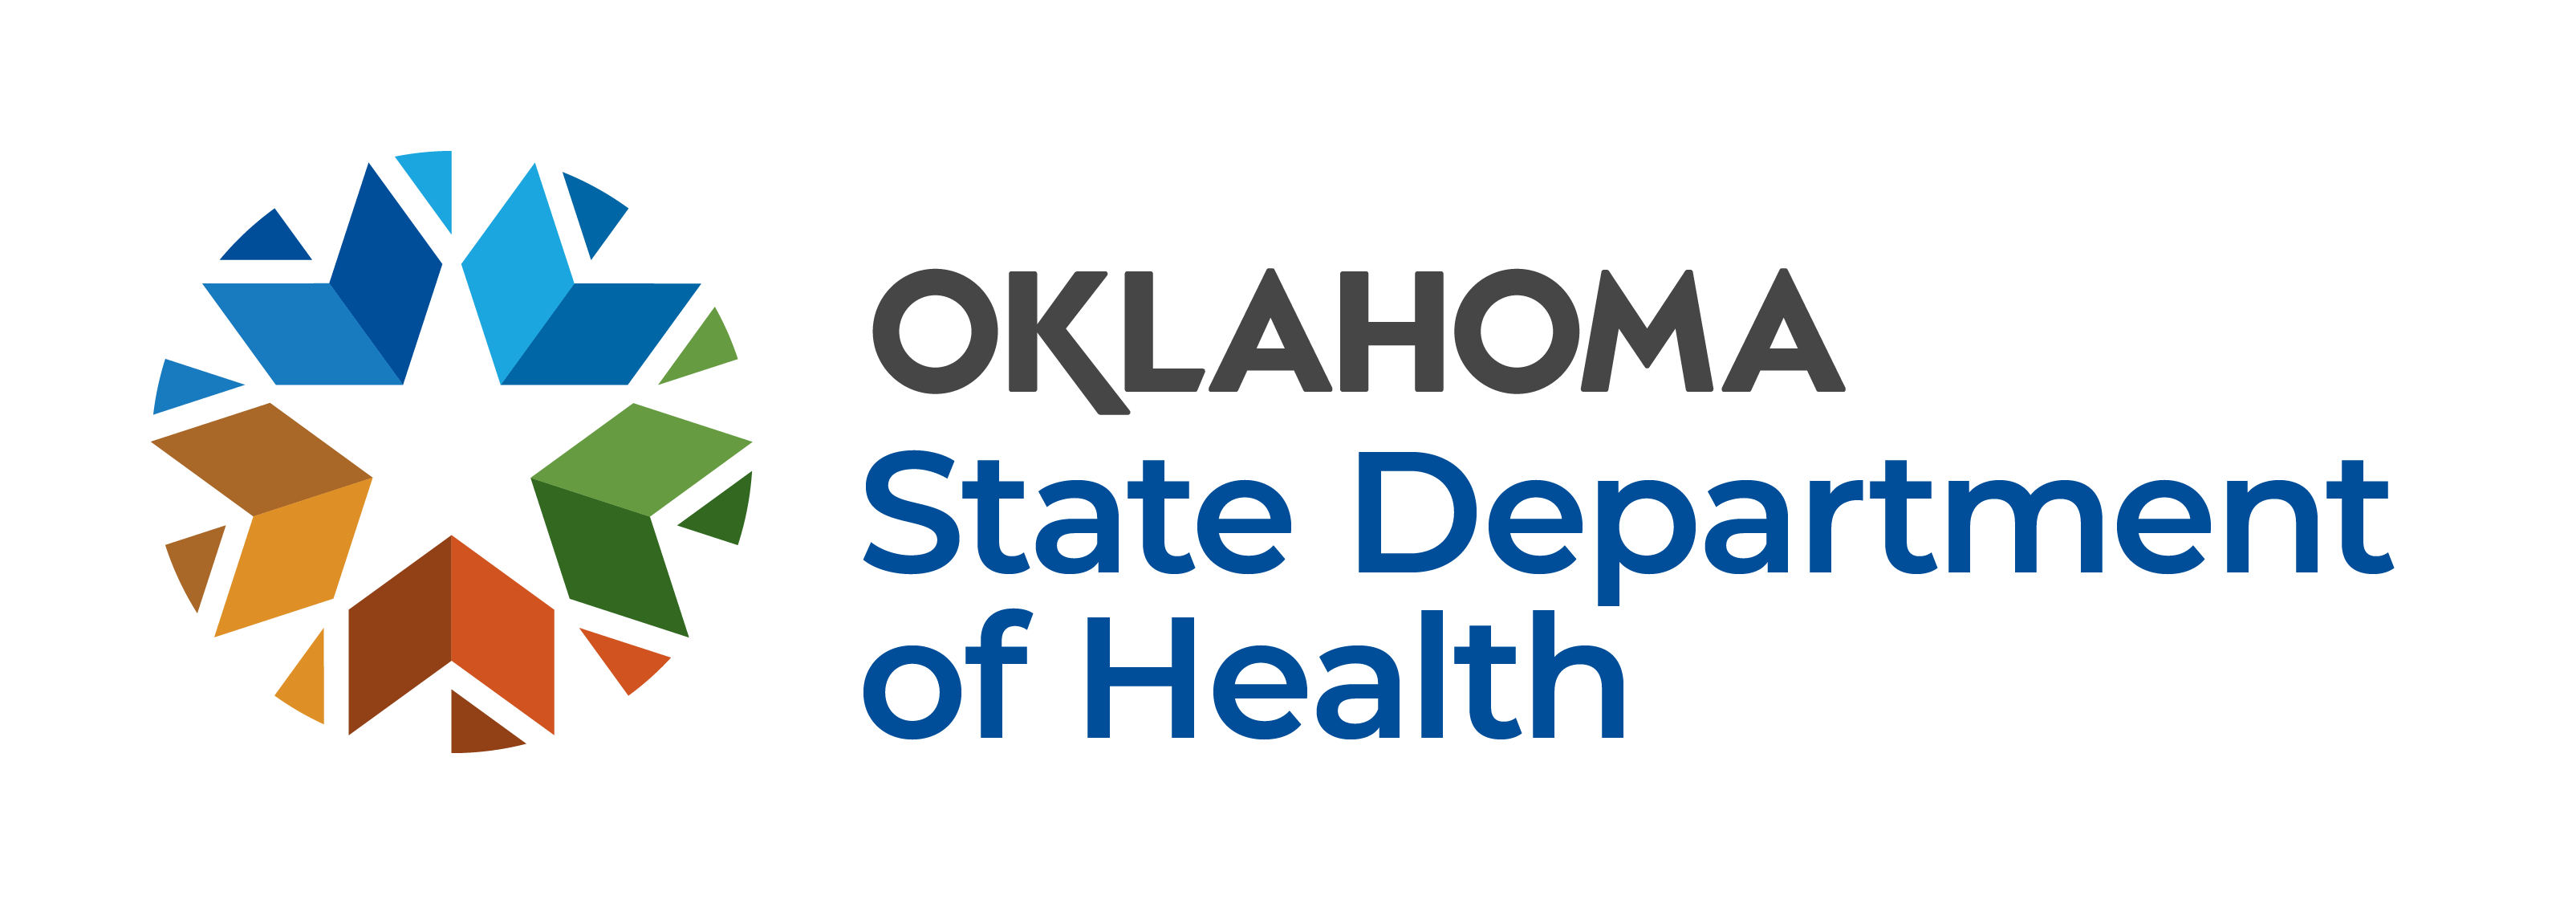 Oklahoma State Department of Health Logo